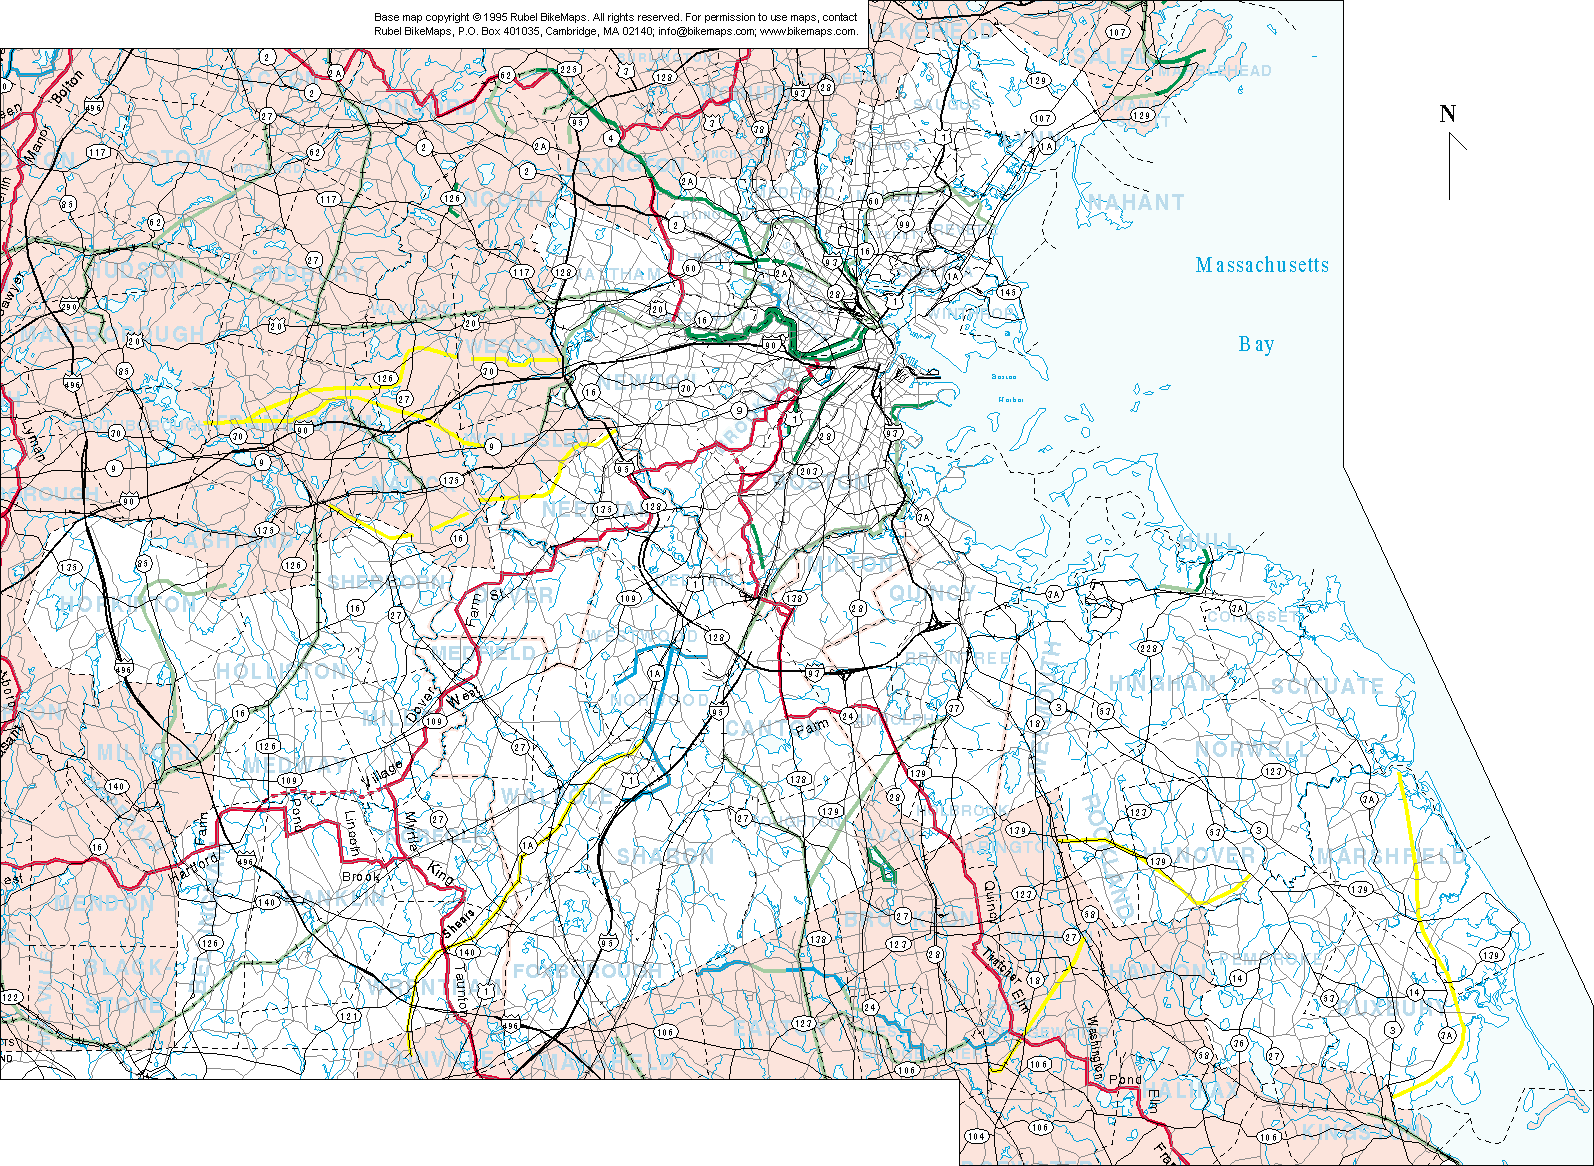 Metropolitan Area Planning Commission south map (235 kB)